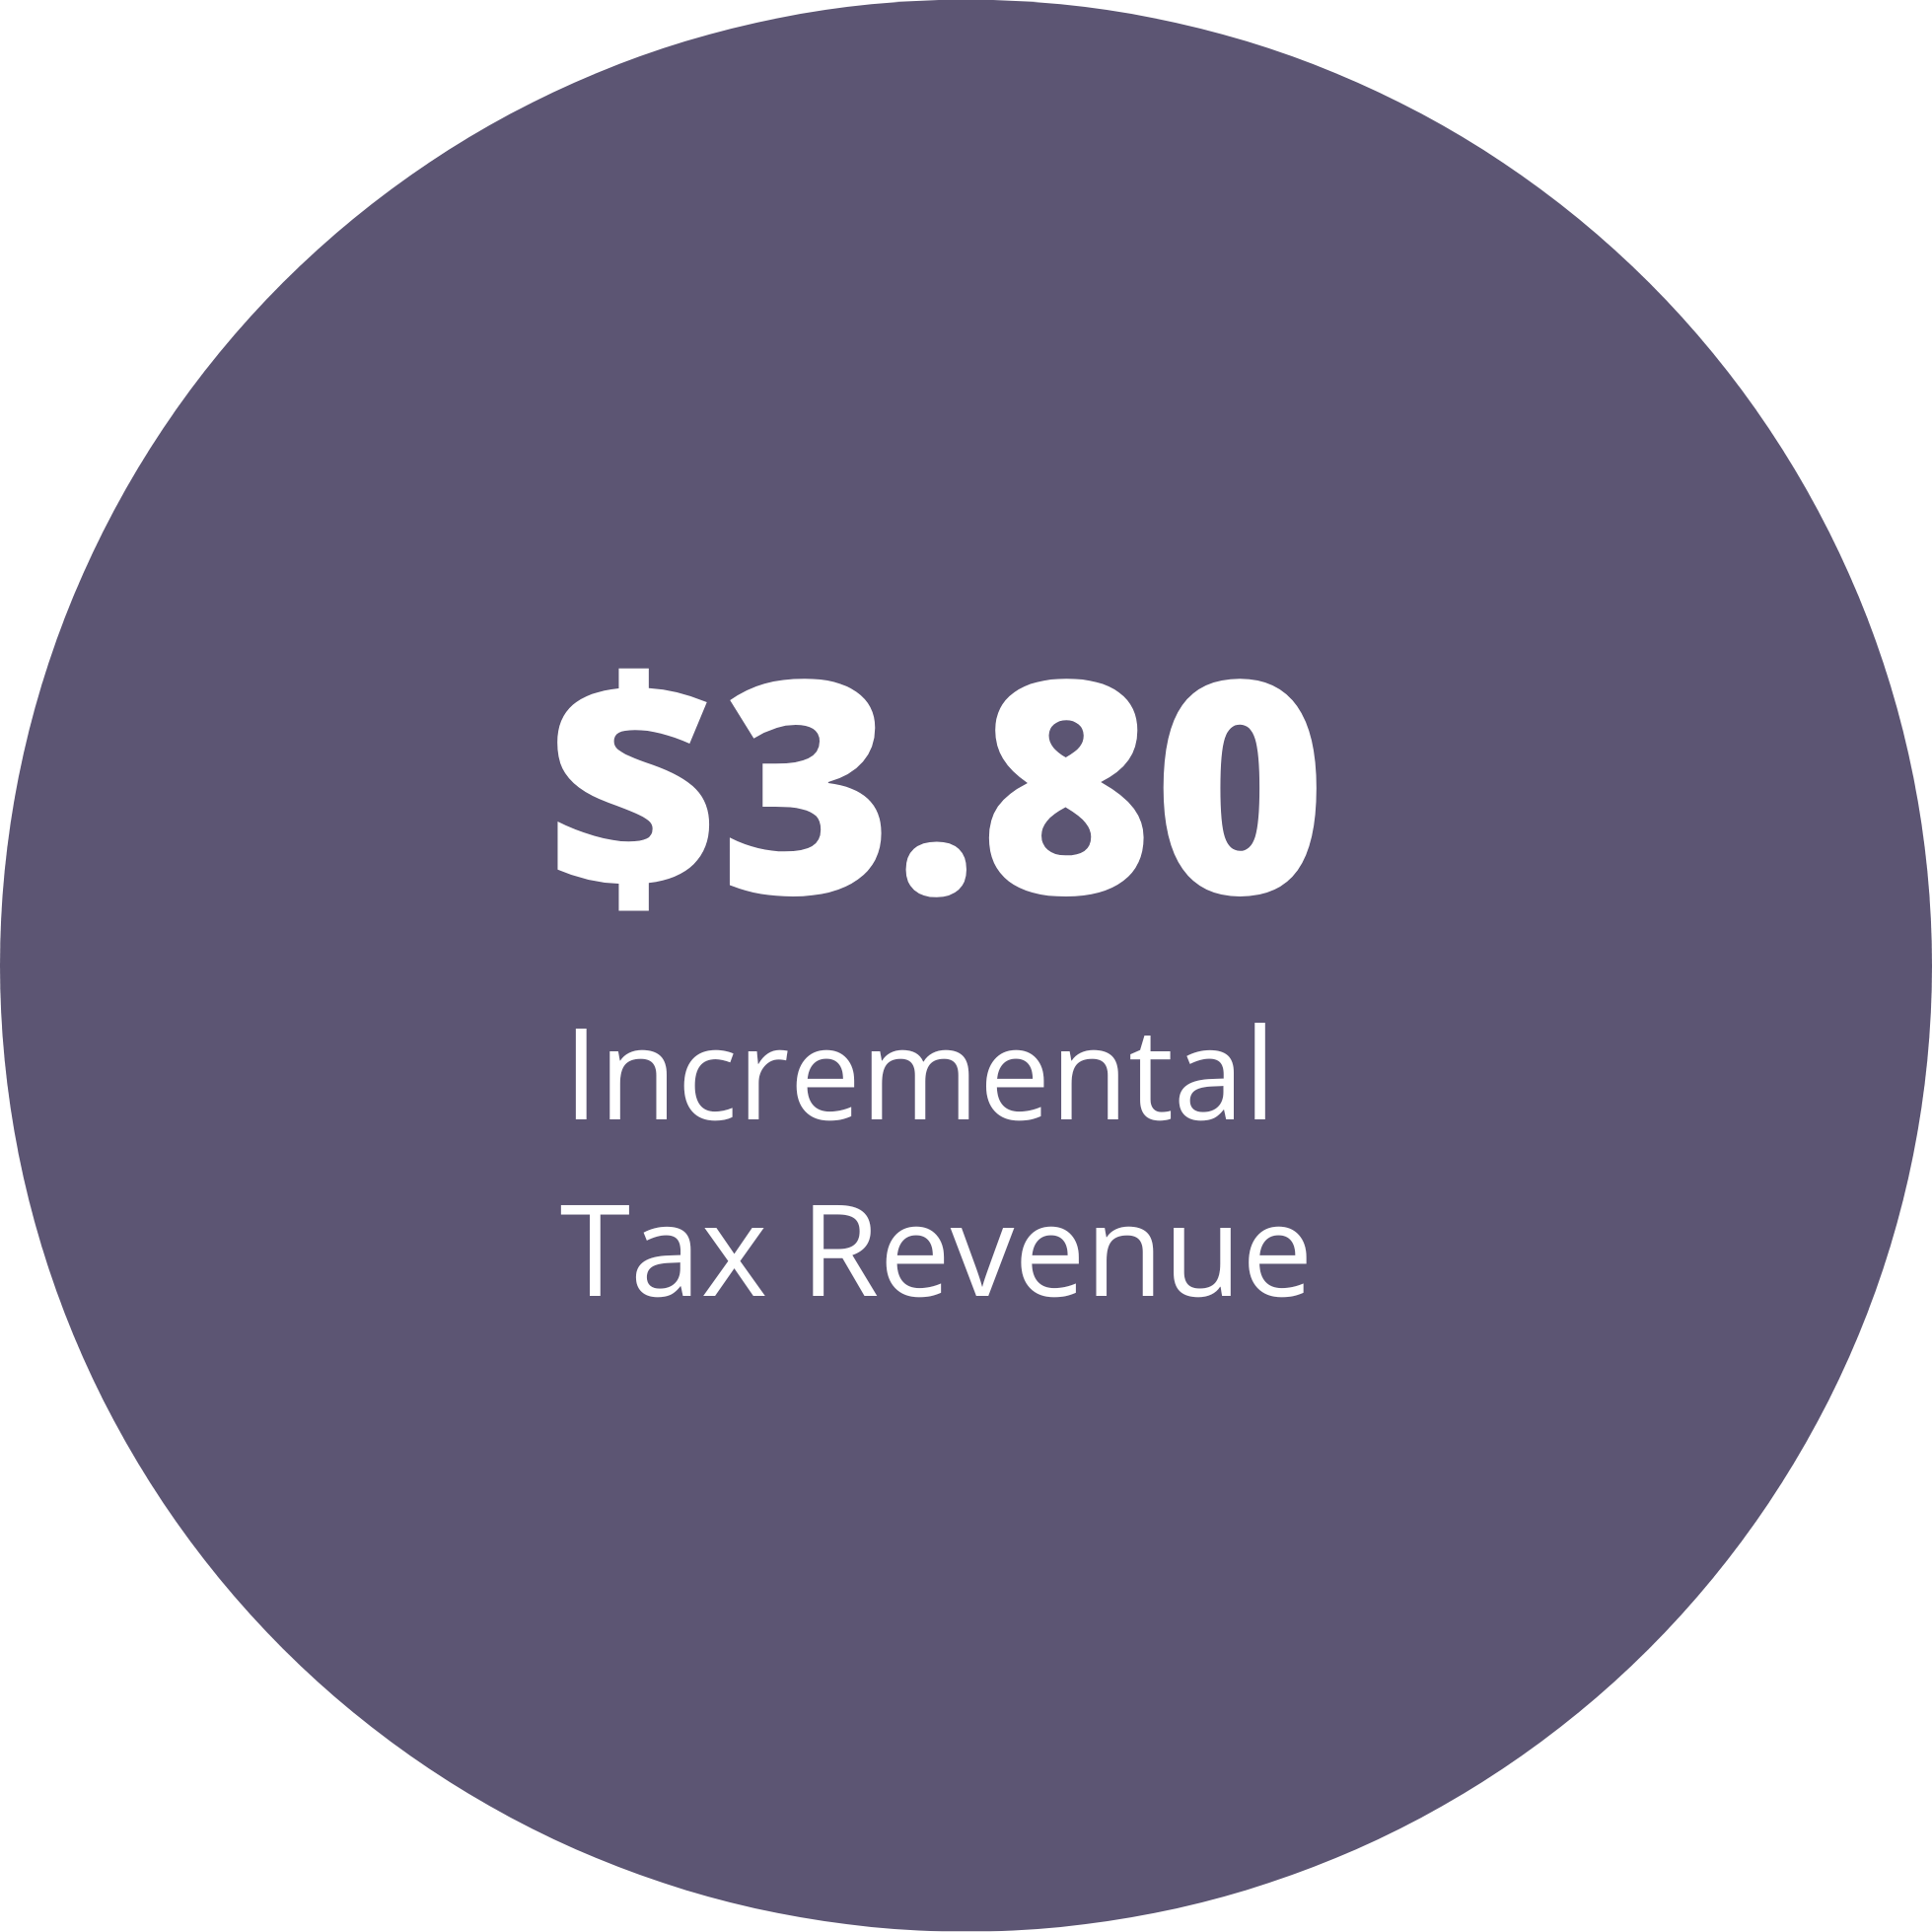 $3.80 Incremental Tax Revenue in big purple circle.